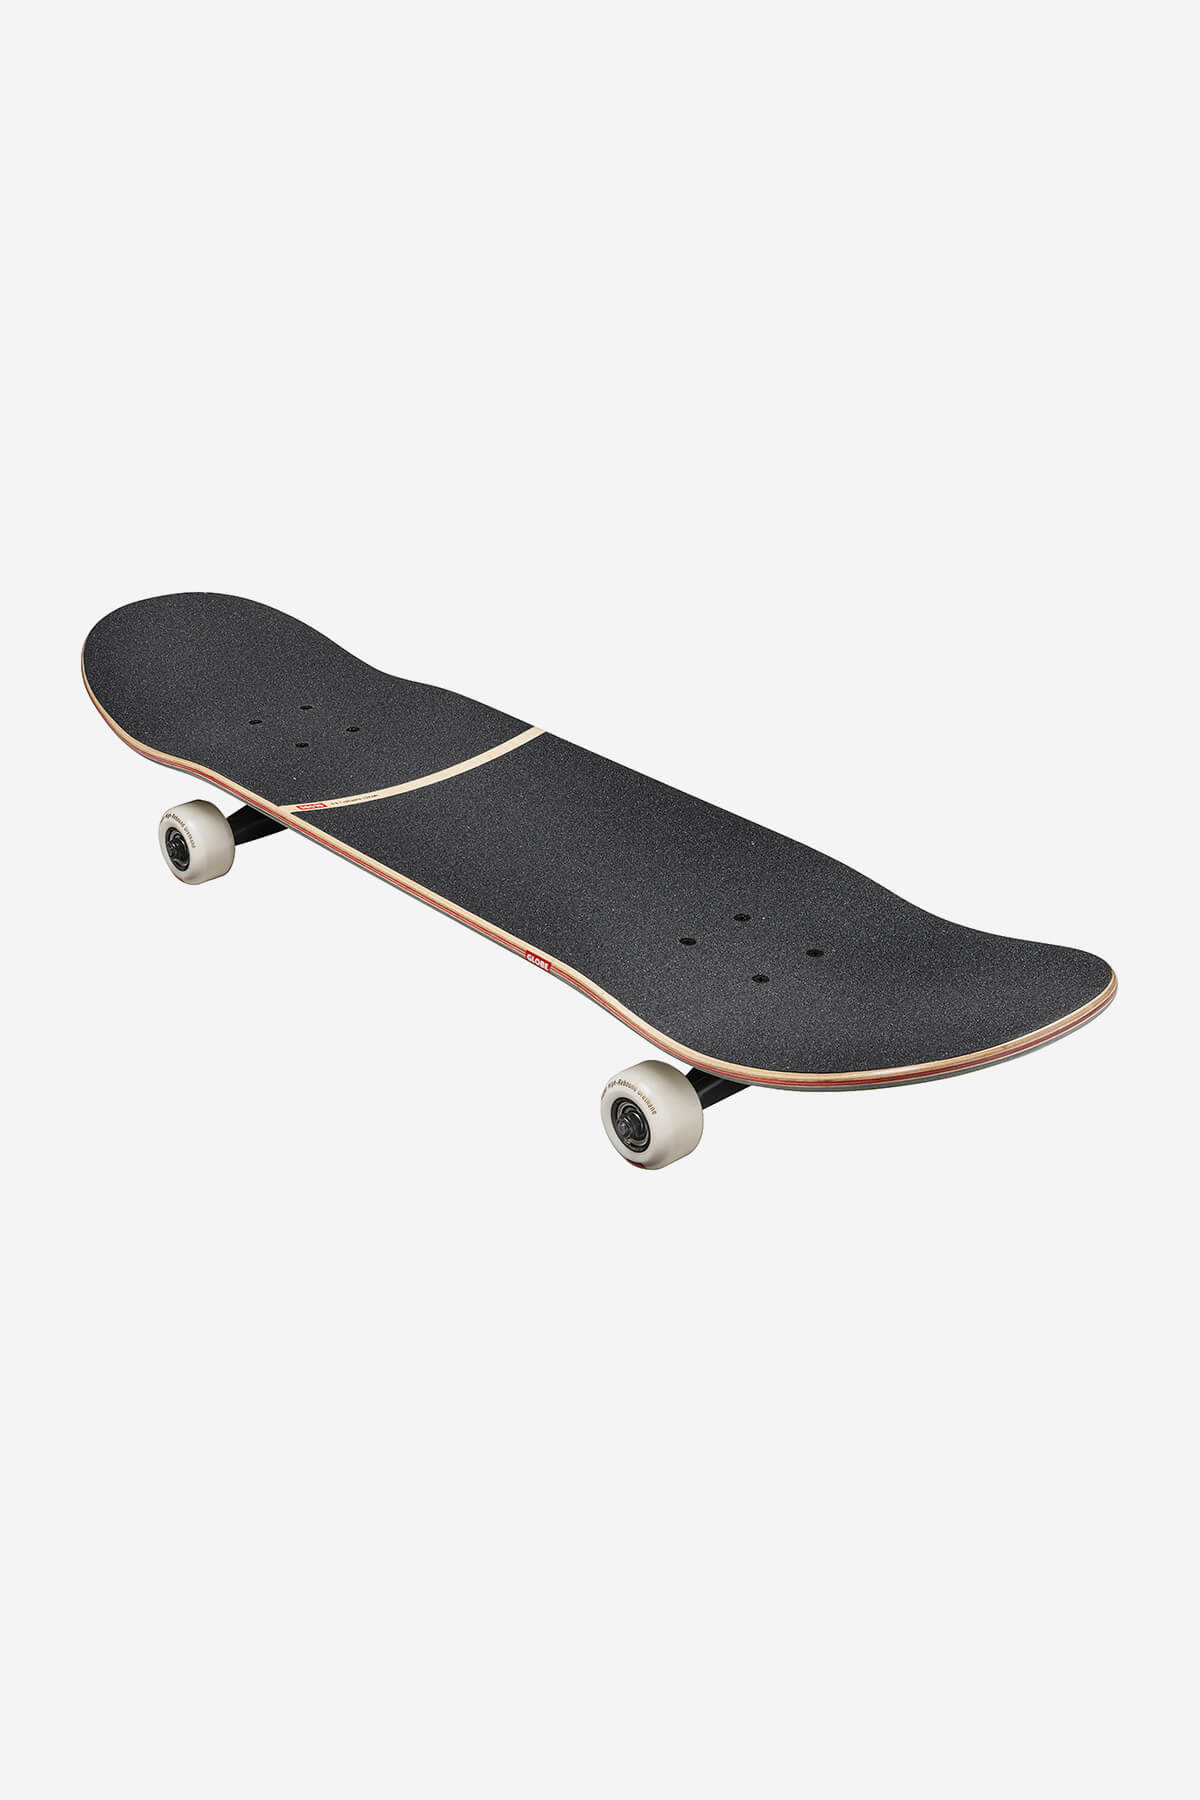 Globe Skateboard completa G3 Bar 8.0" Completa Skateboard en Impact/Olive